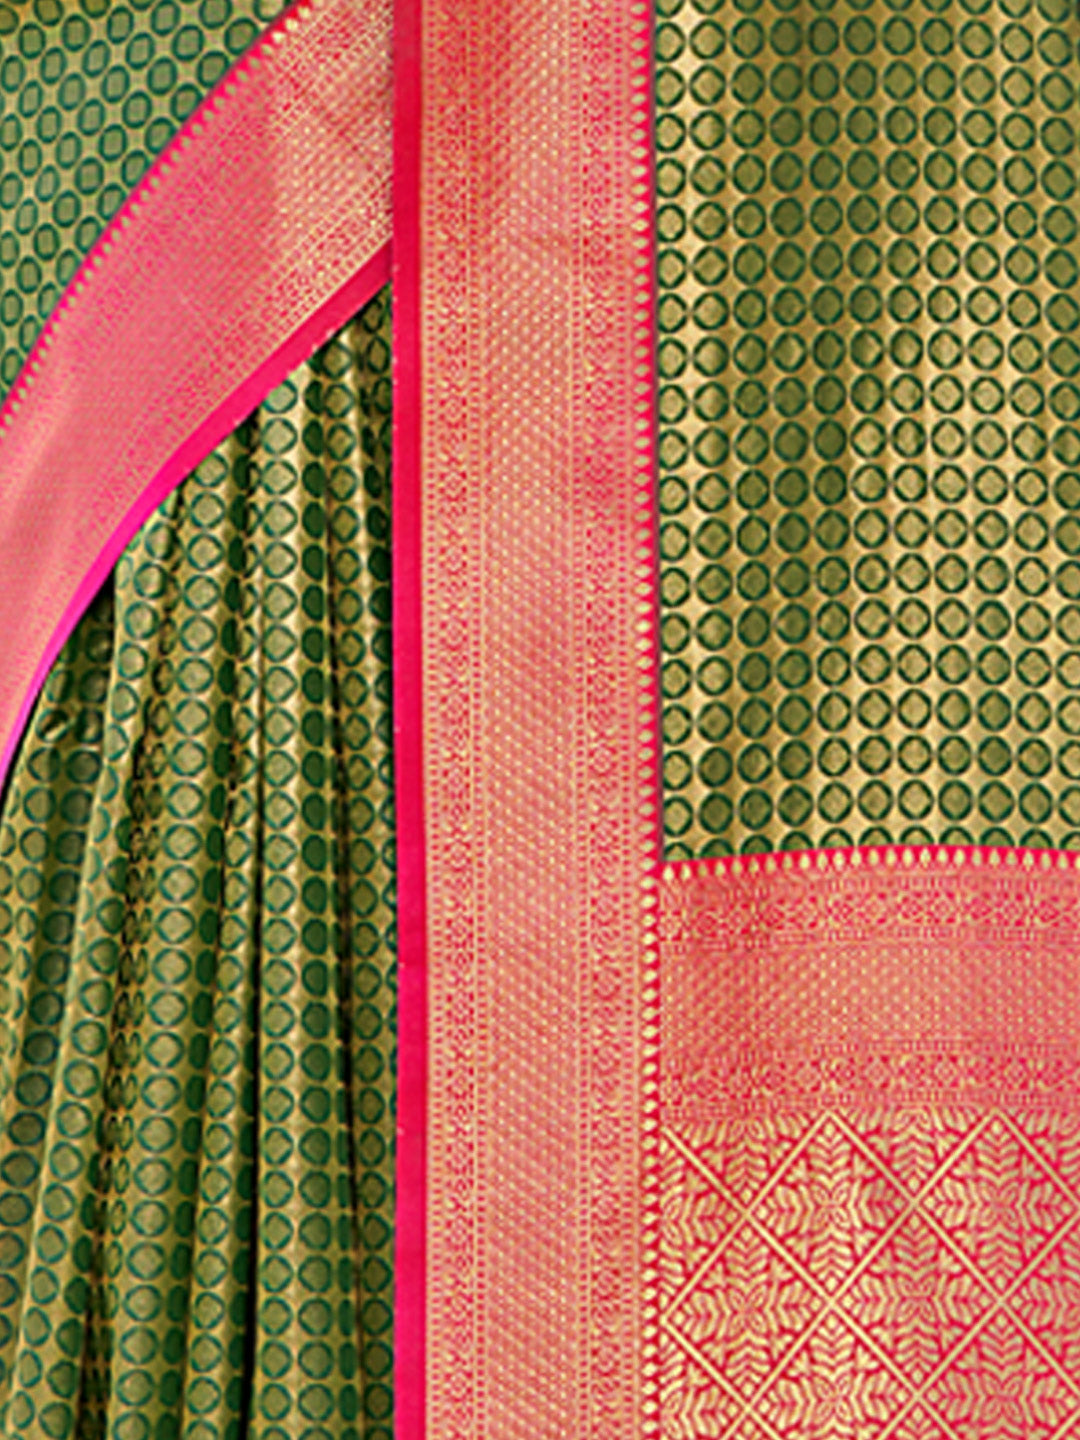 Women's Mhendi Green Banarasi Silk Woven Work Traditional Tassels Saree - Sangam Prints